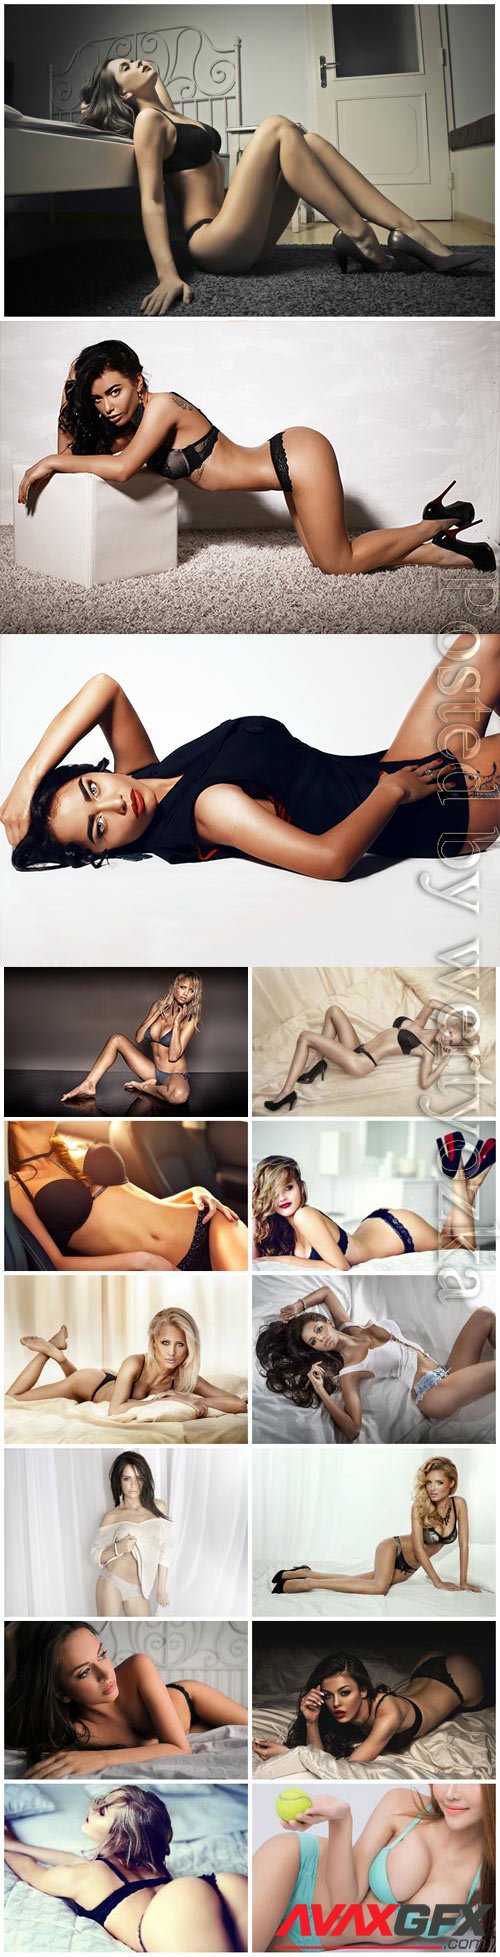 Luxury women in lingerie posing stock photo vol 7